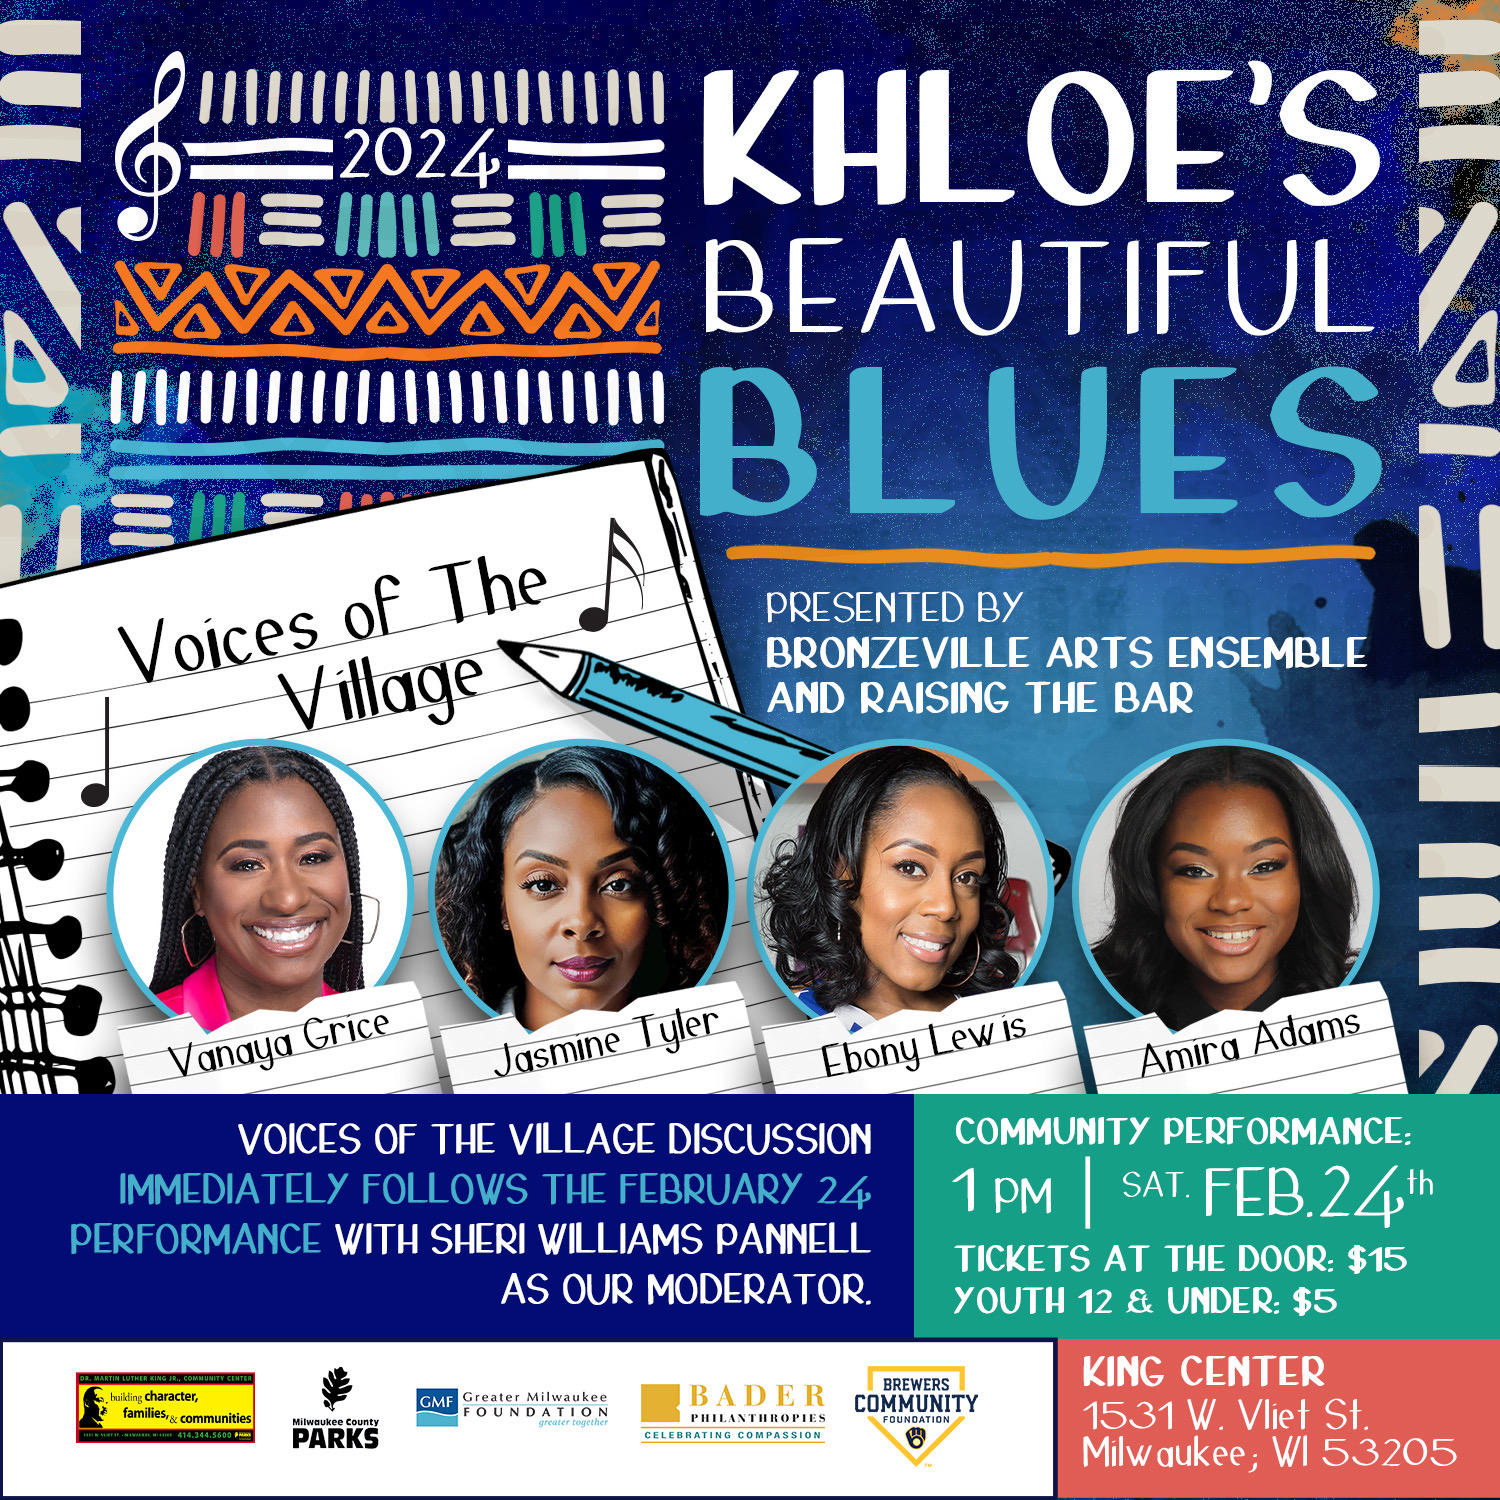 Bronzeville Arts Ensemble and Raising The Bar present Khloe’s Beautiful Blues play at King Community Center